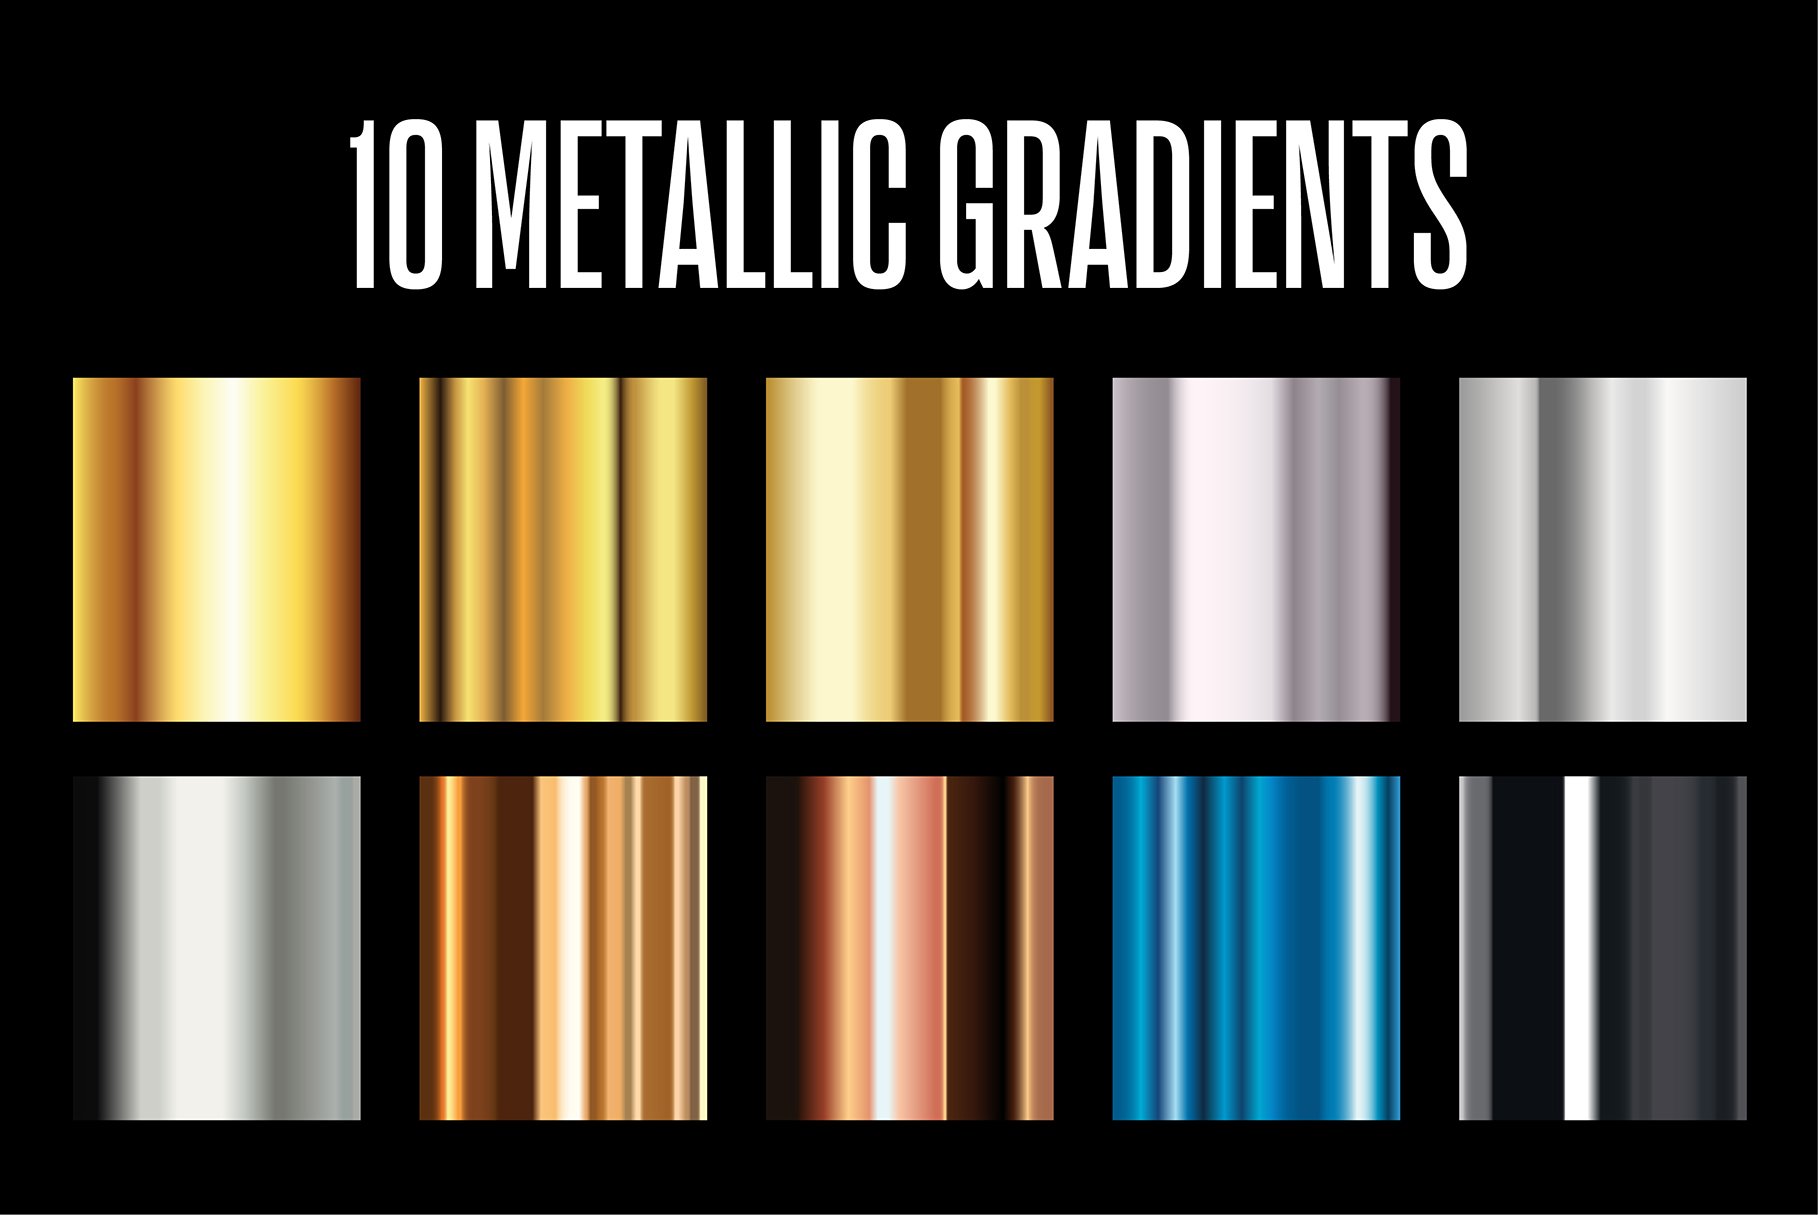 10 Metallic Gradients - .AI file cover image.